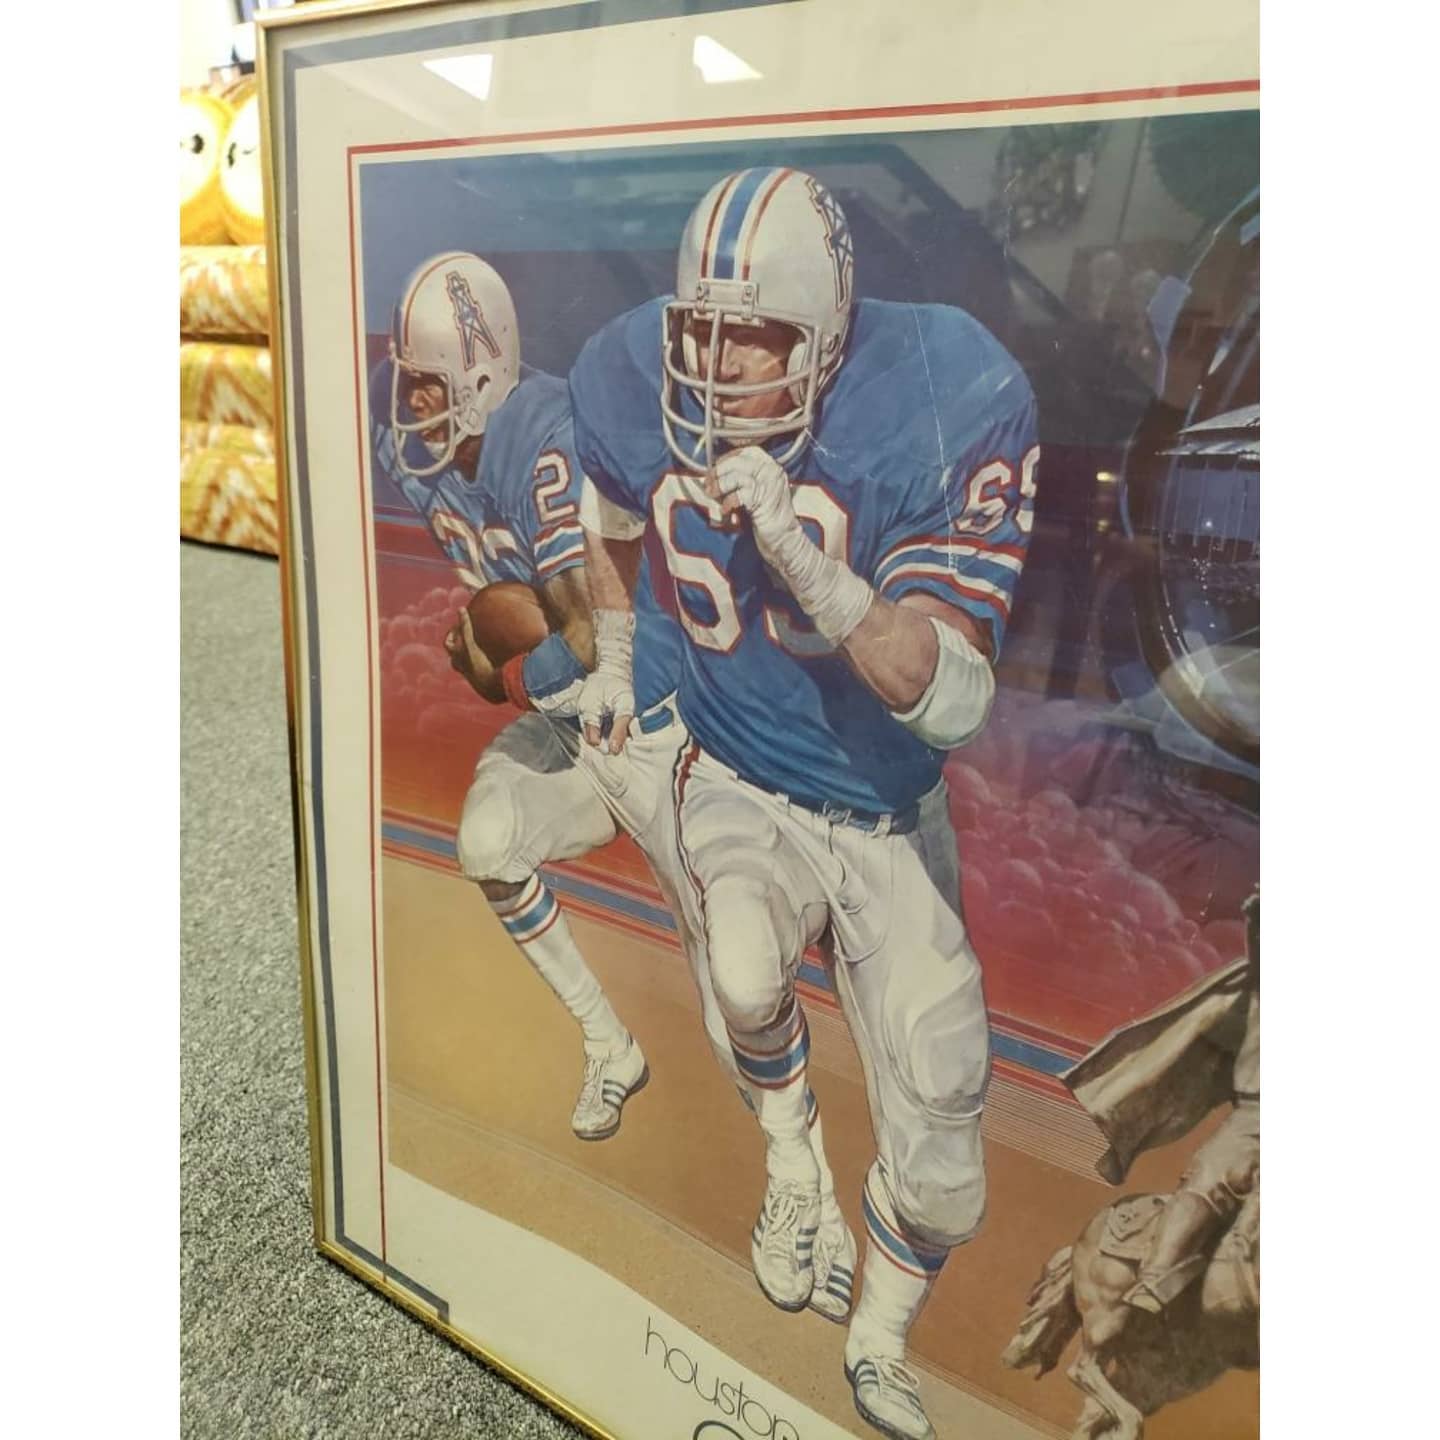 Vintage 1983 Houston Oilers Football Poster